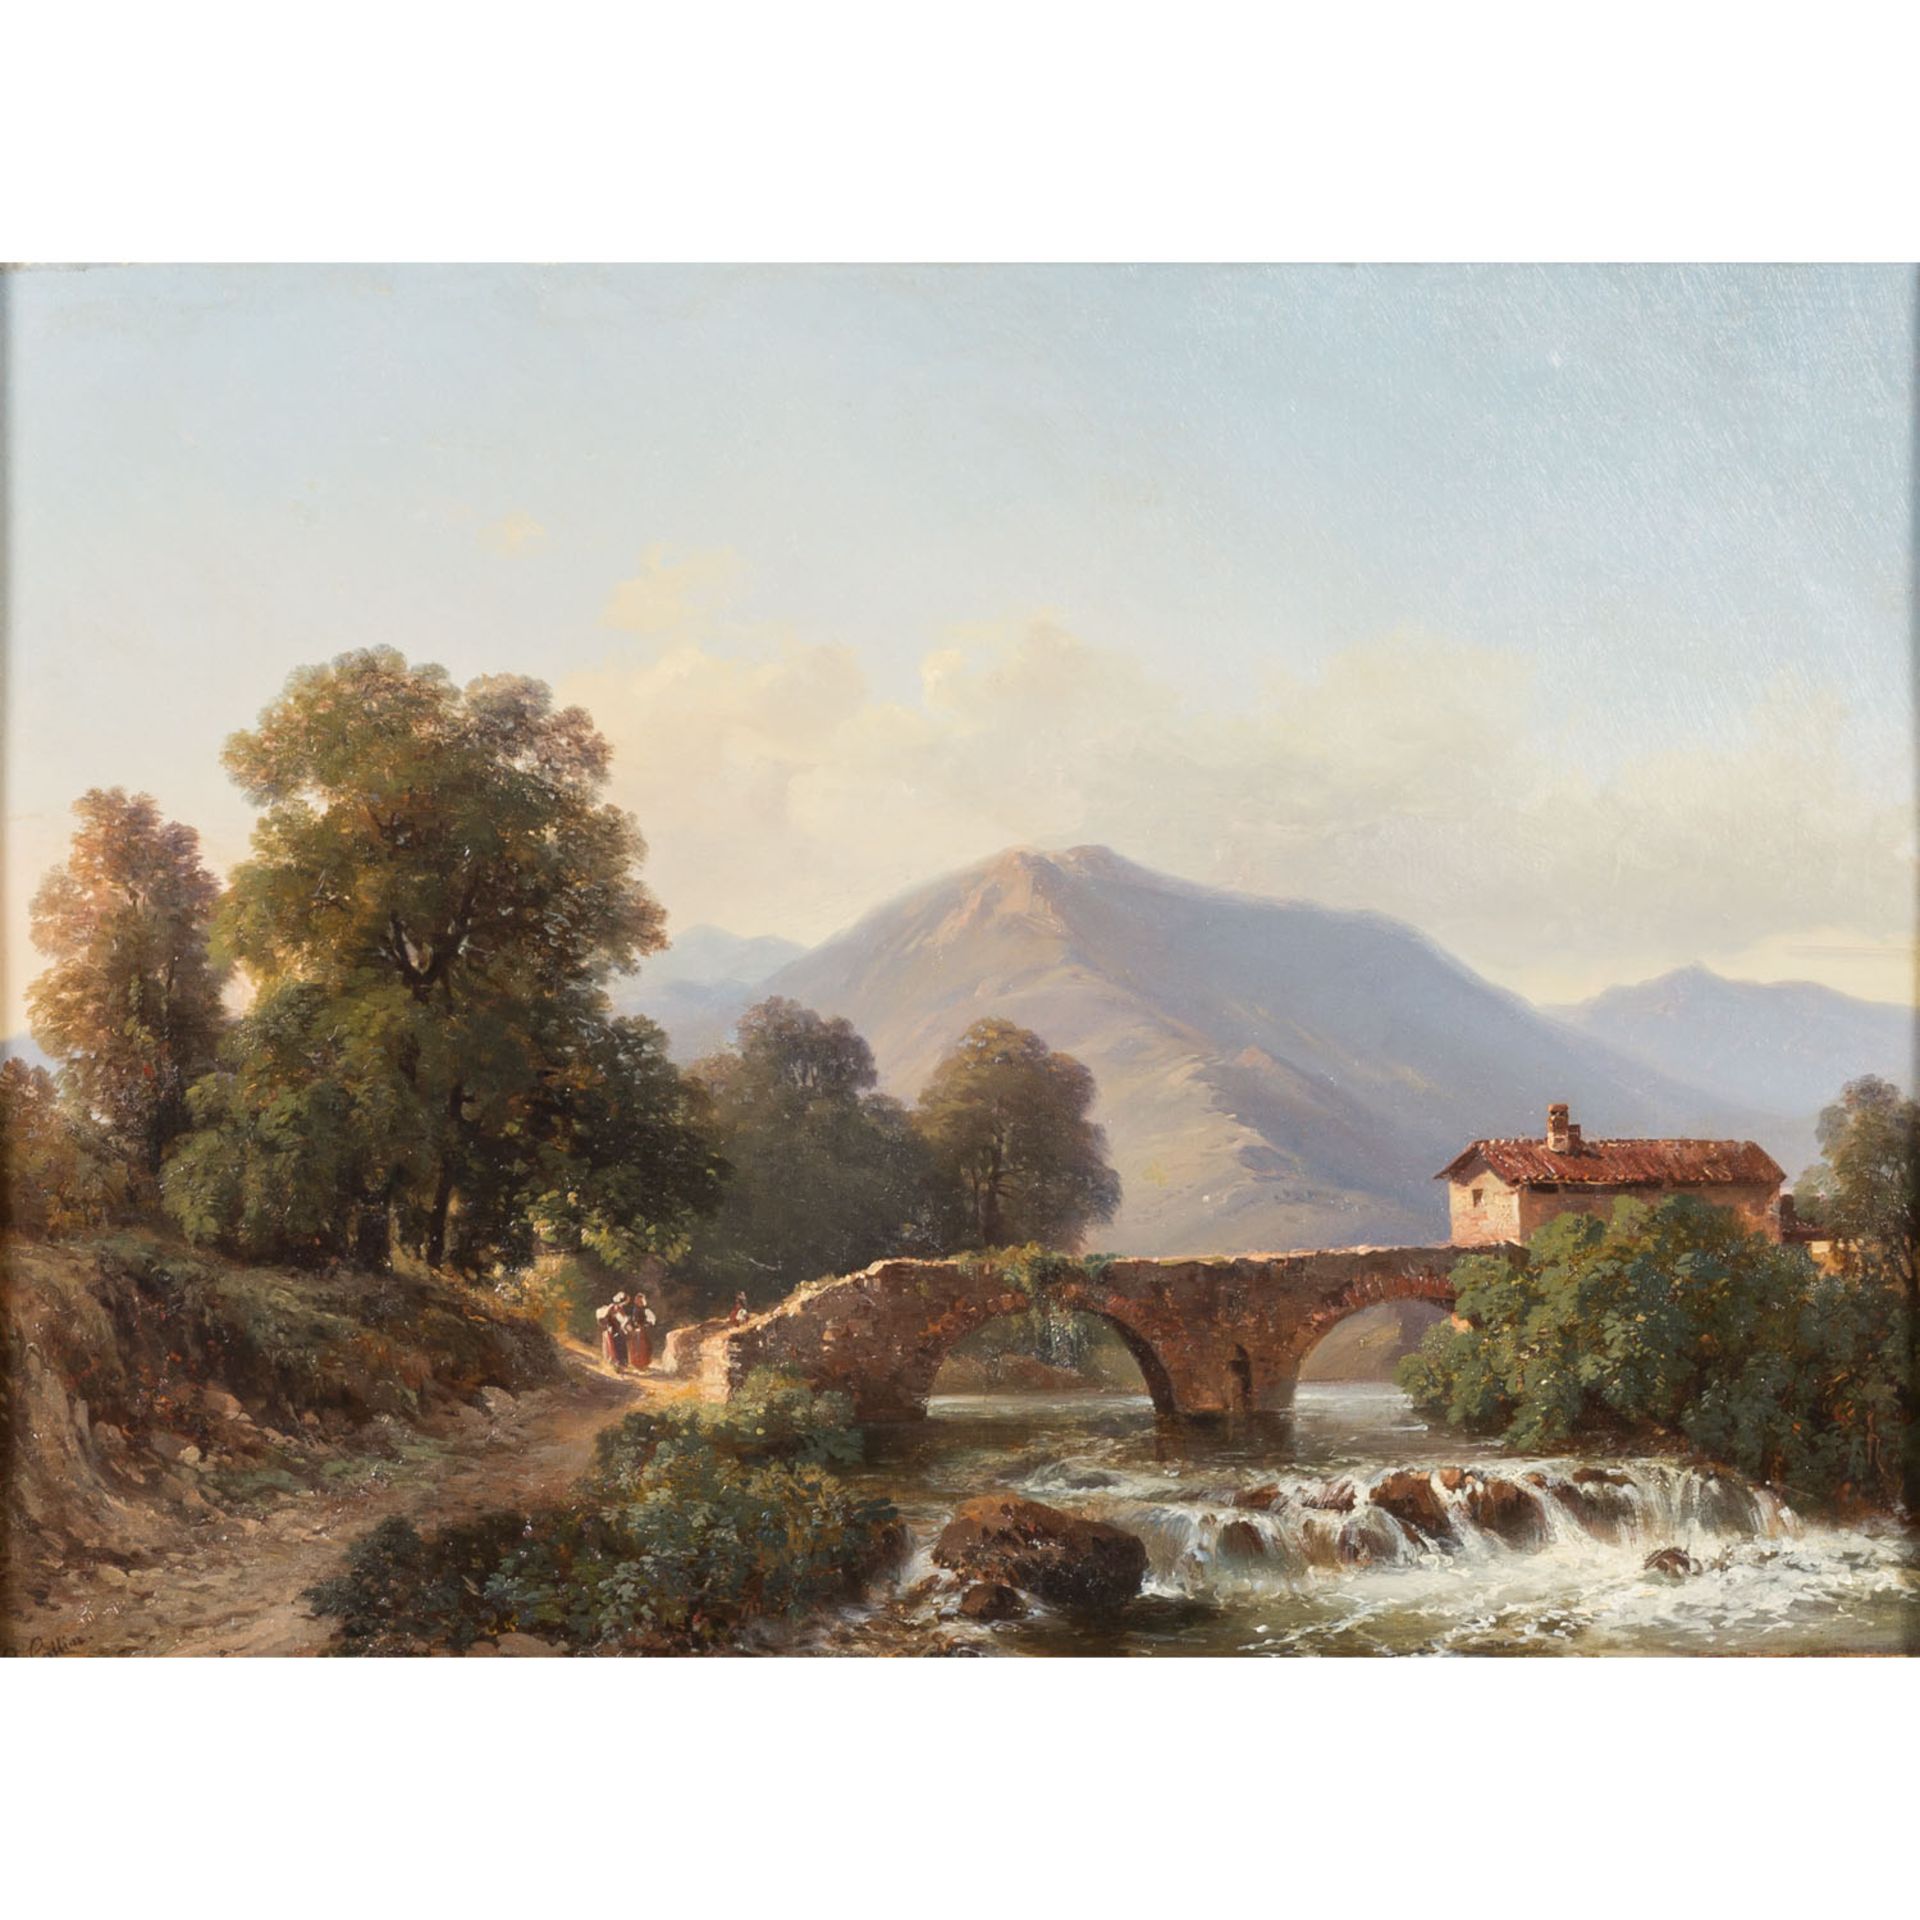 COTTIN, EUGÈNE (1840-1902), "Partie aus dem Rhonethal",steinerne Bogenbrücke über d